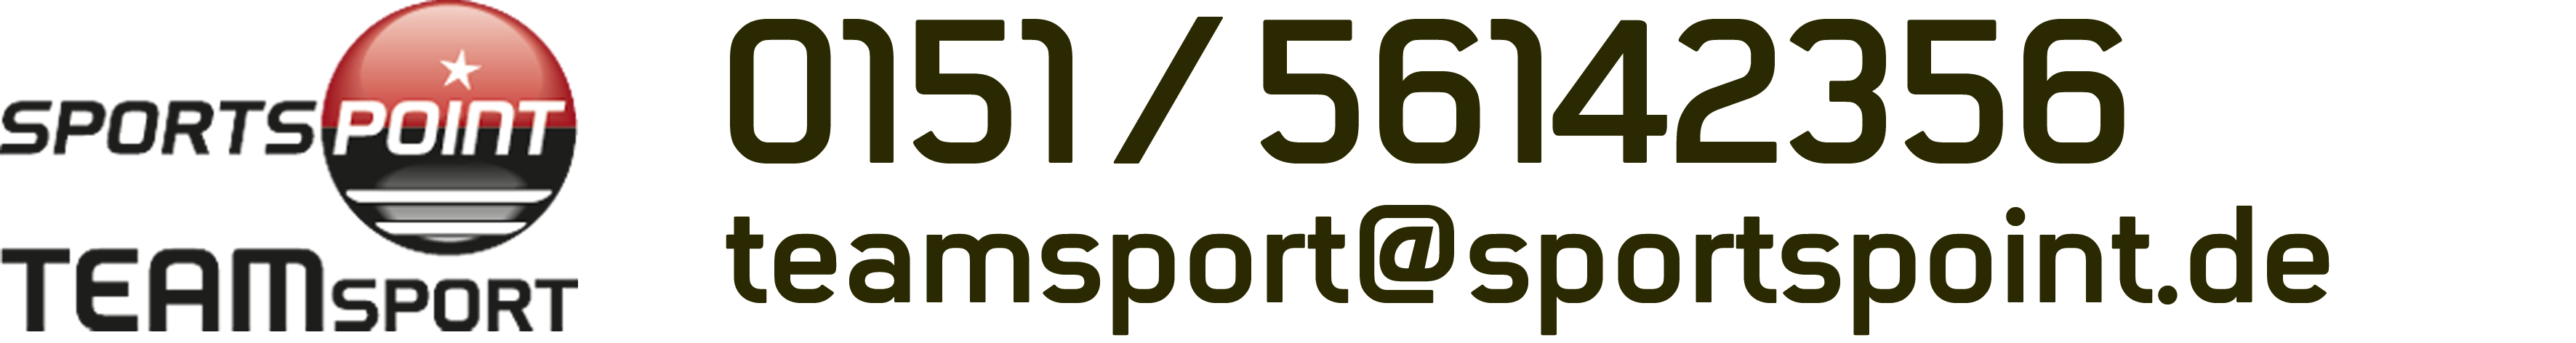 SV Grün-Weiß Annahütte Logo 2